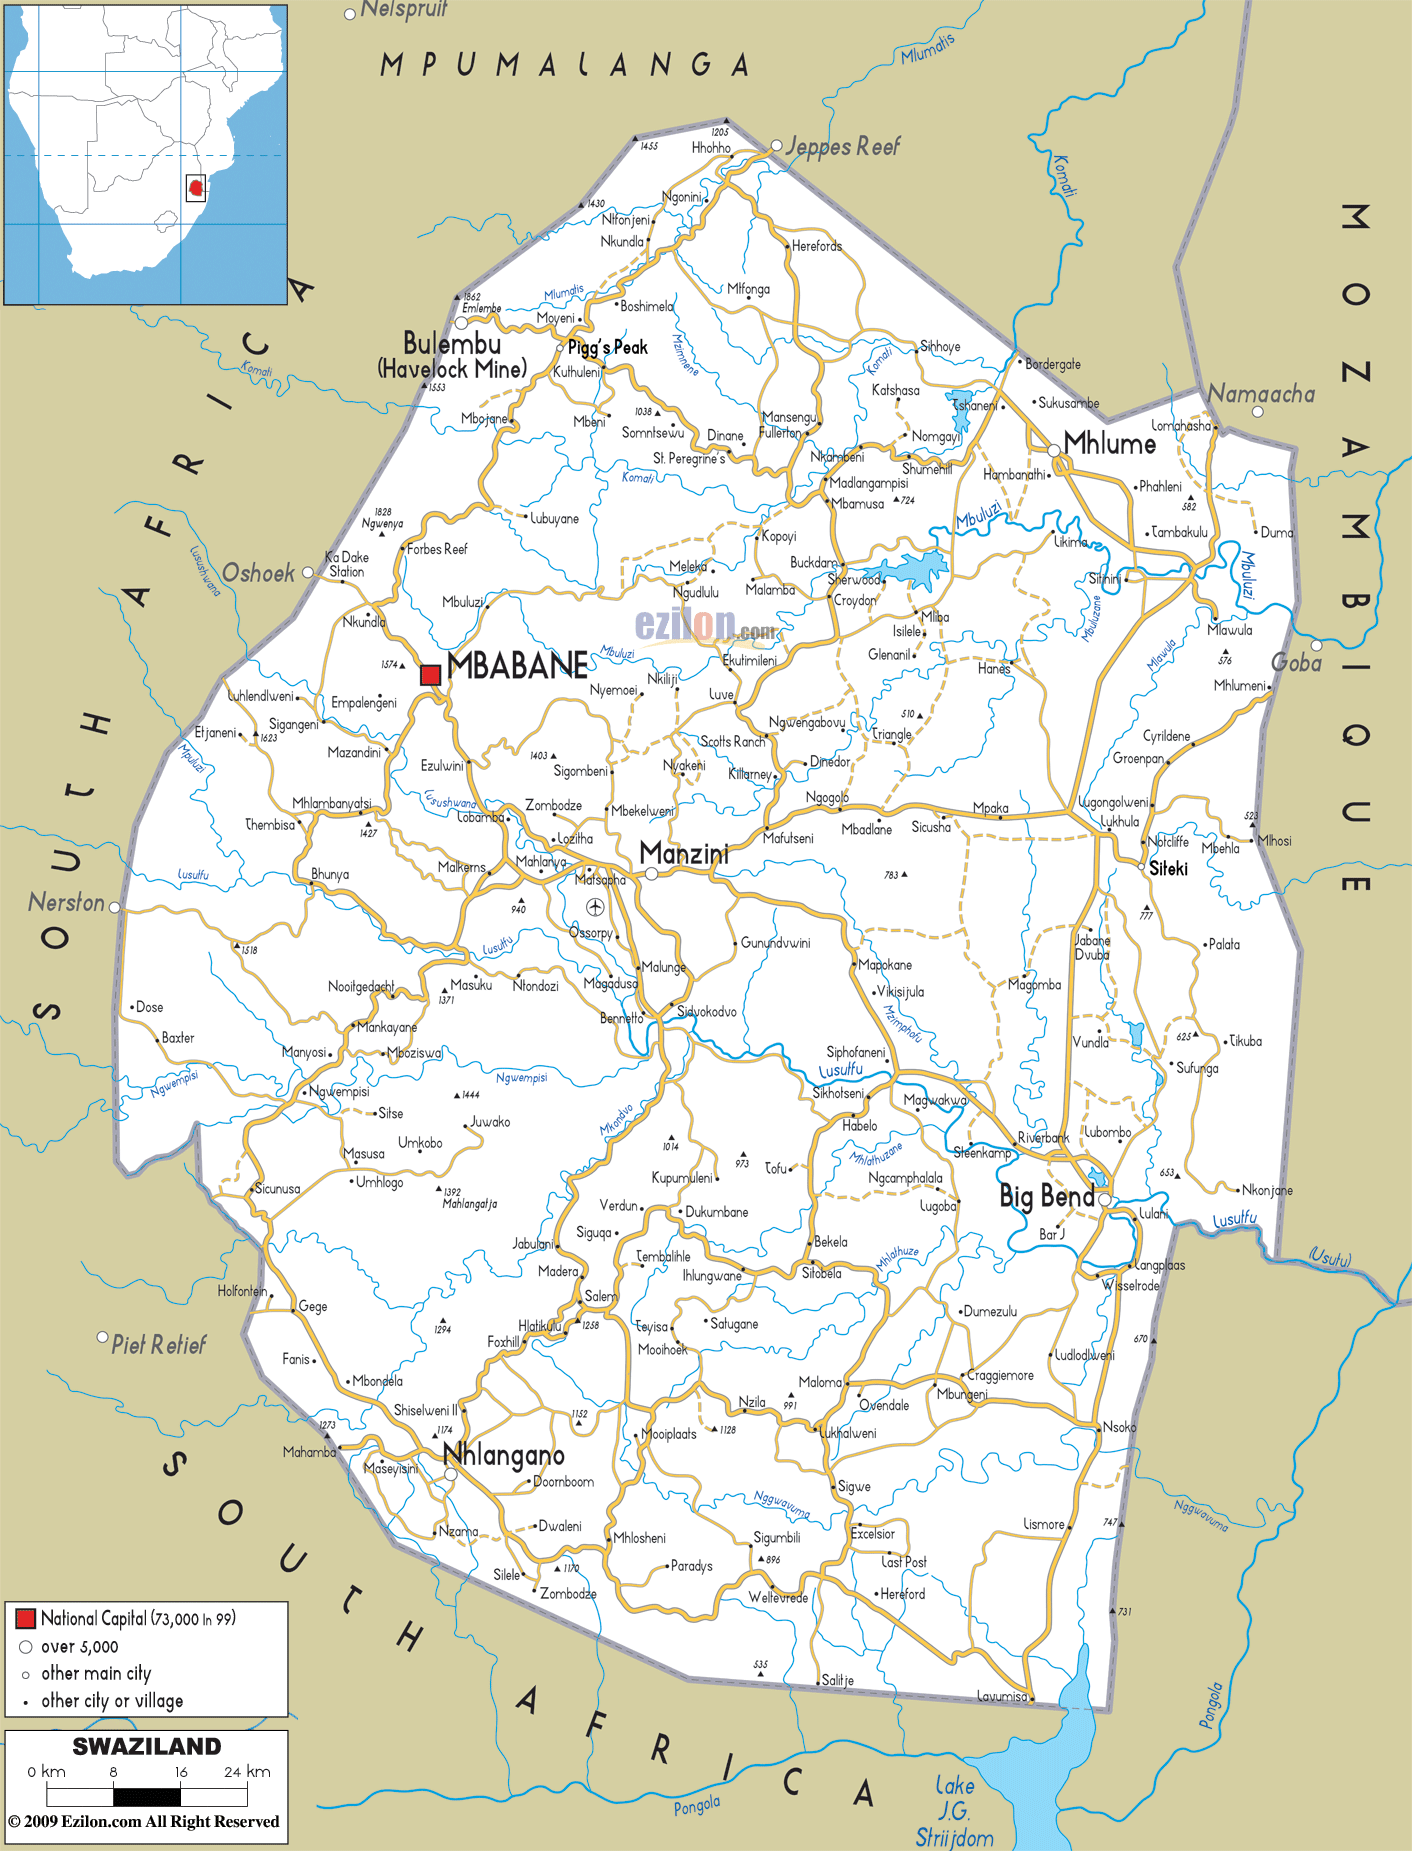 Road Map of Swaziland - Ezilon Maps